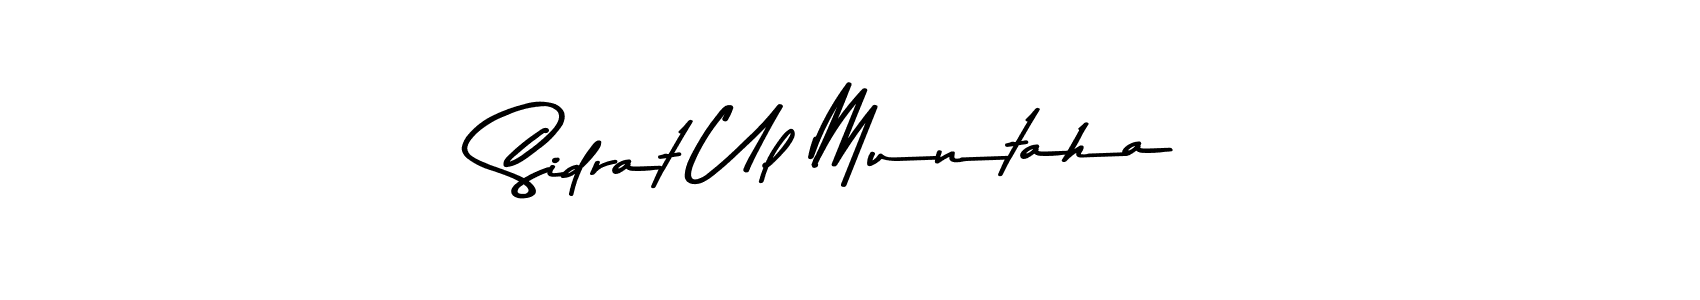 Make a beautiful signature design for name Sidrat Ul Muntaha. Use this online signature maker to create a handwritten signature for free. Sidrat Ul Muntaha signature style 9 images and pictures png